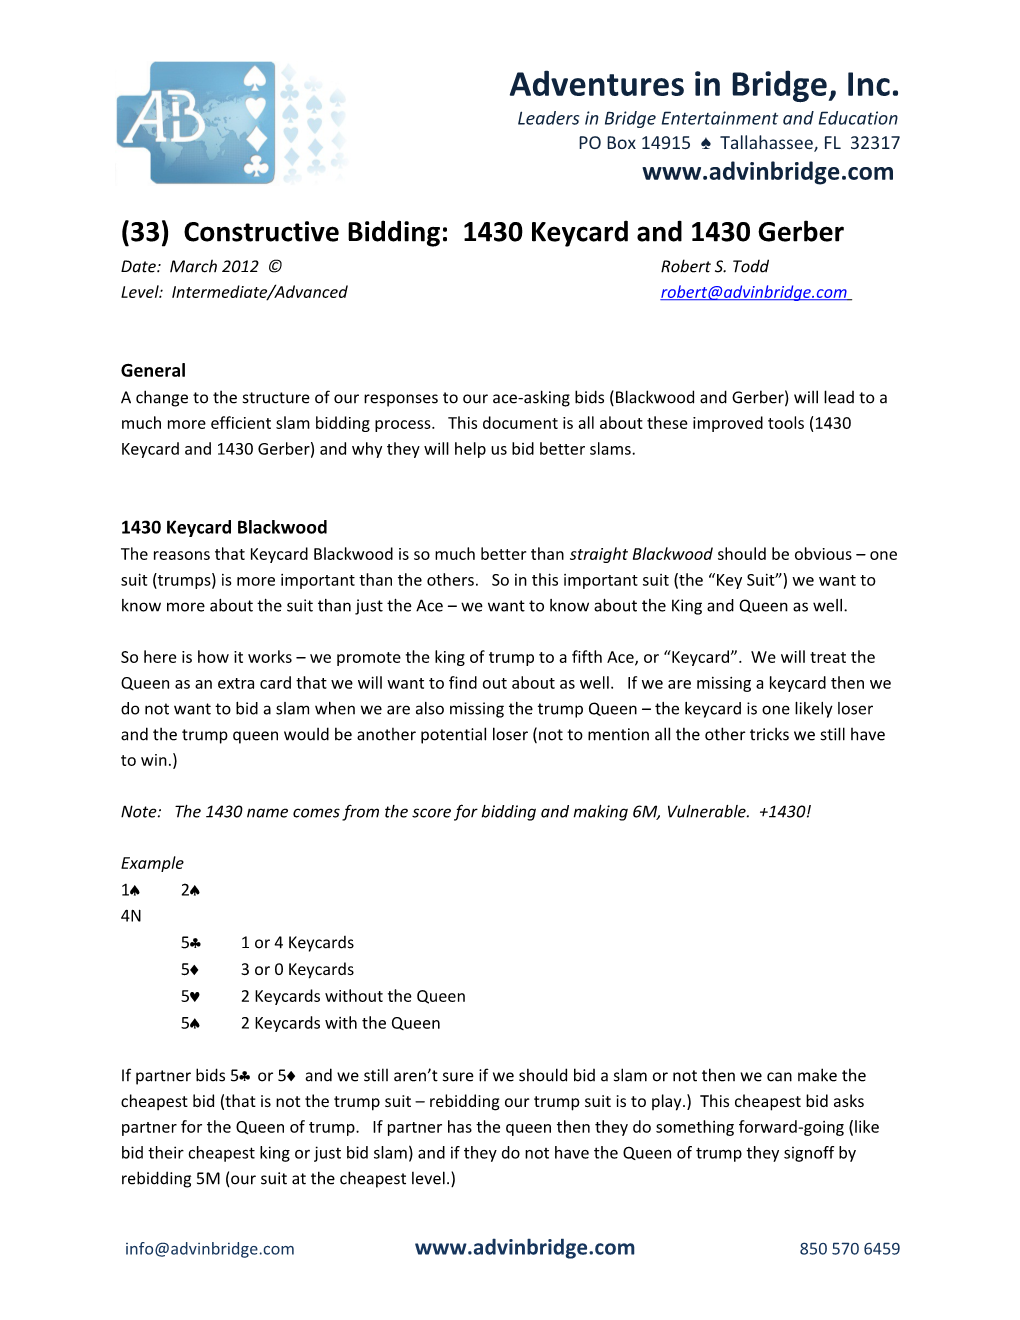 (33) Constructive Bidding: 1430 Keycard and 1430 Gerber